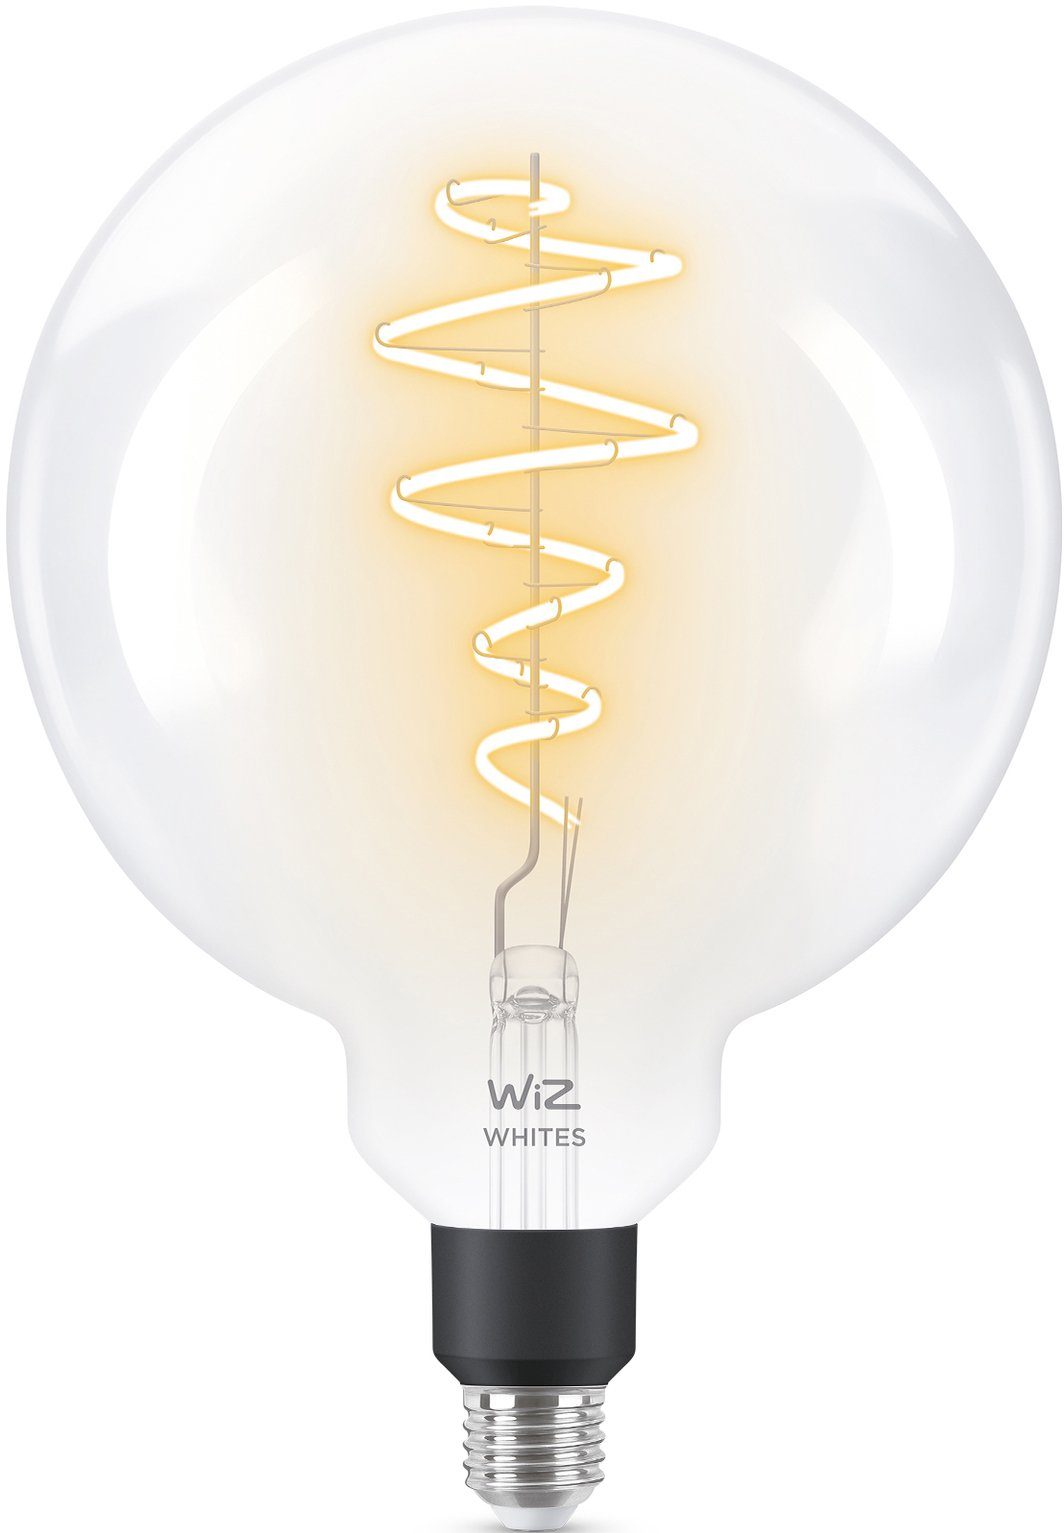 WiZ LED-Filament Filament 40W E27 XL-Globeform G200 Clear Einzelpack, E27, 1 St., Warmweiß, Wiz Tunable White Filament LED Lampen für klassisches Vintage-Design